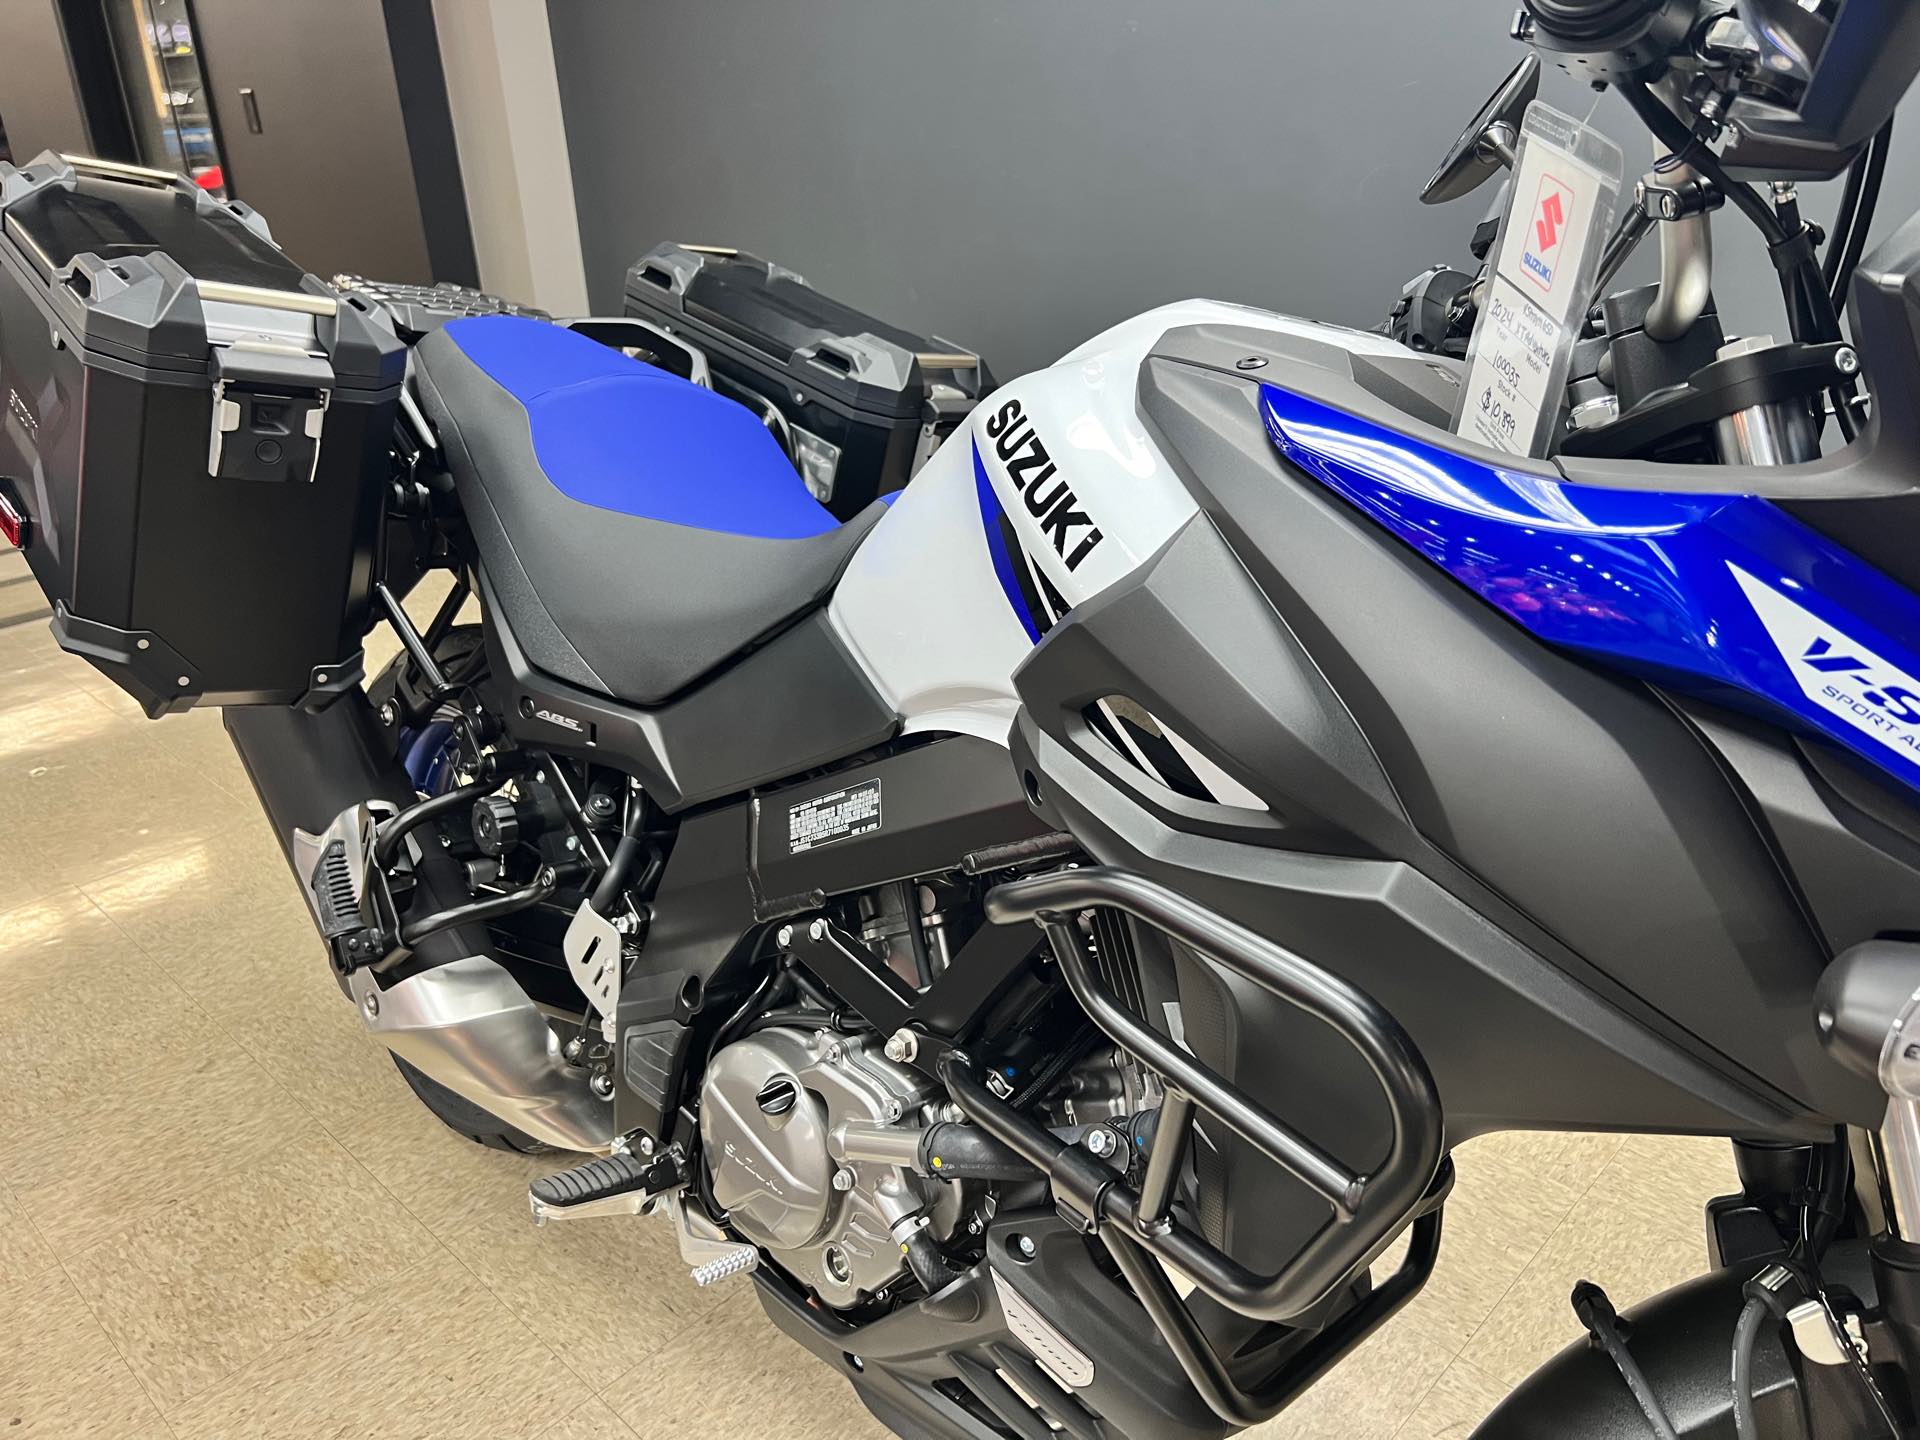 2024 Suzuki V-Strom 650XT Adventure at Sloans Motorcycle ATV, Murfreesboro, TN, 37129